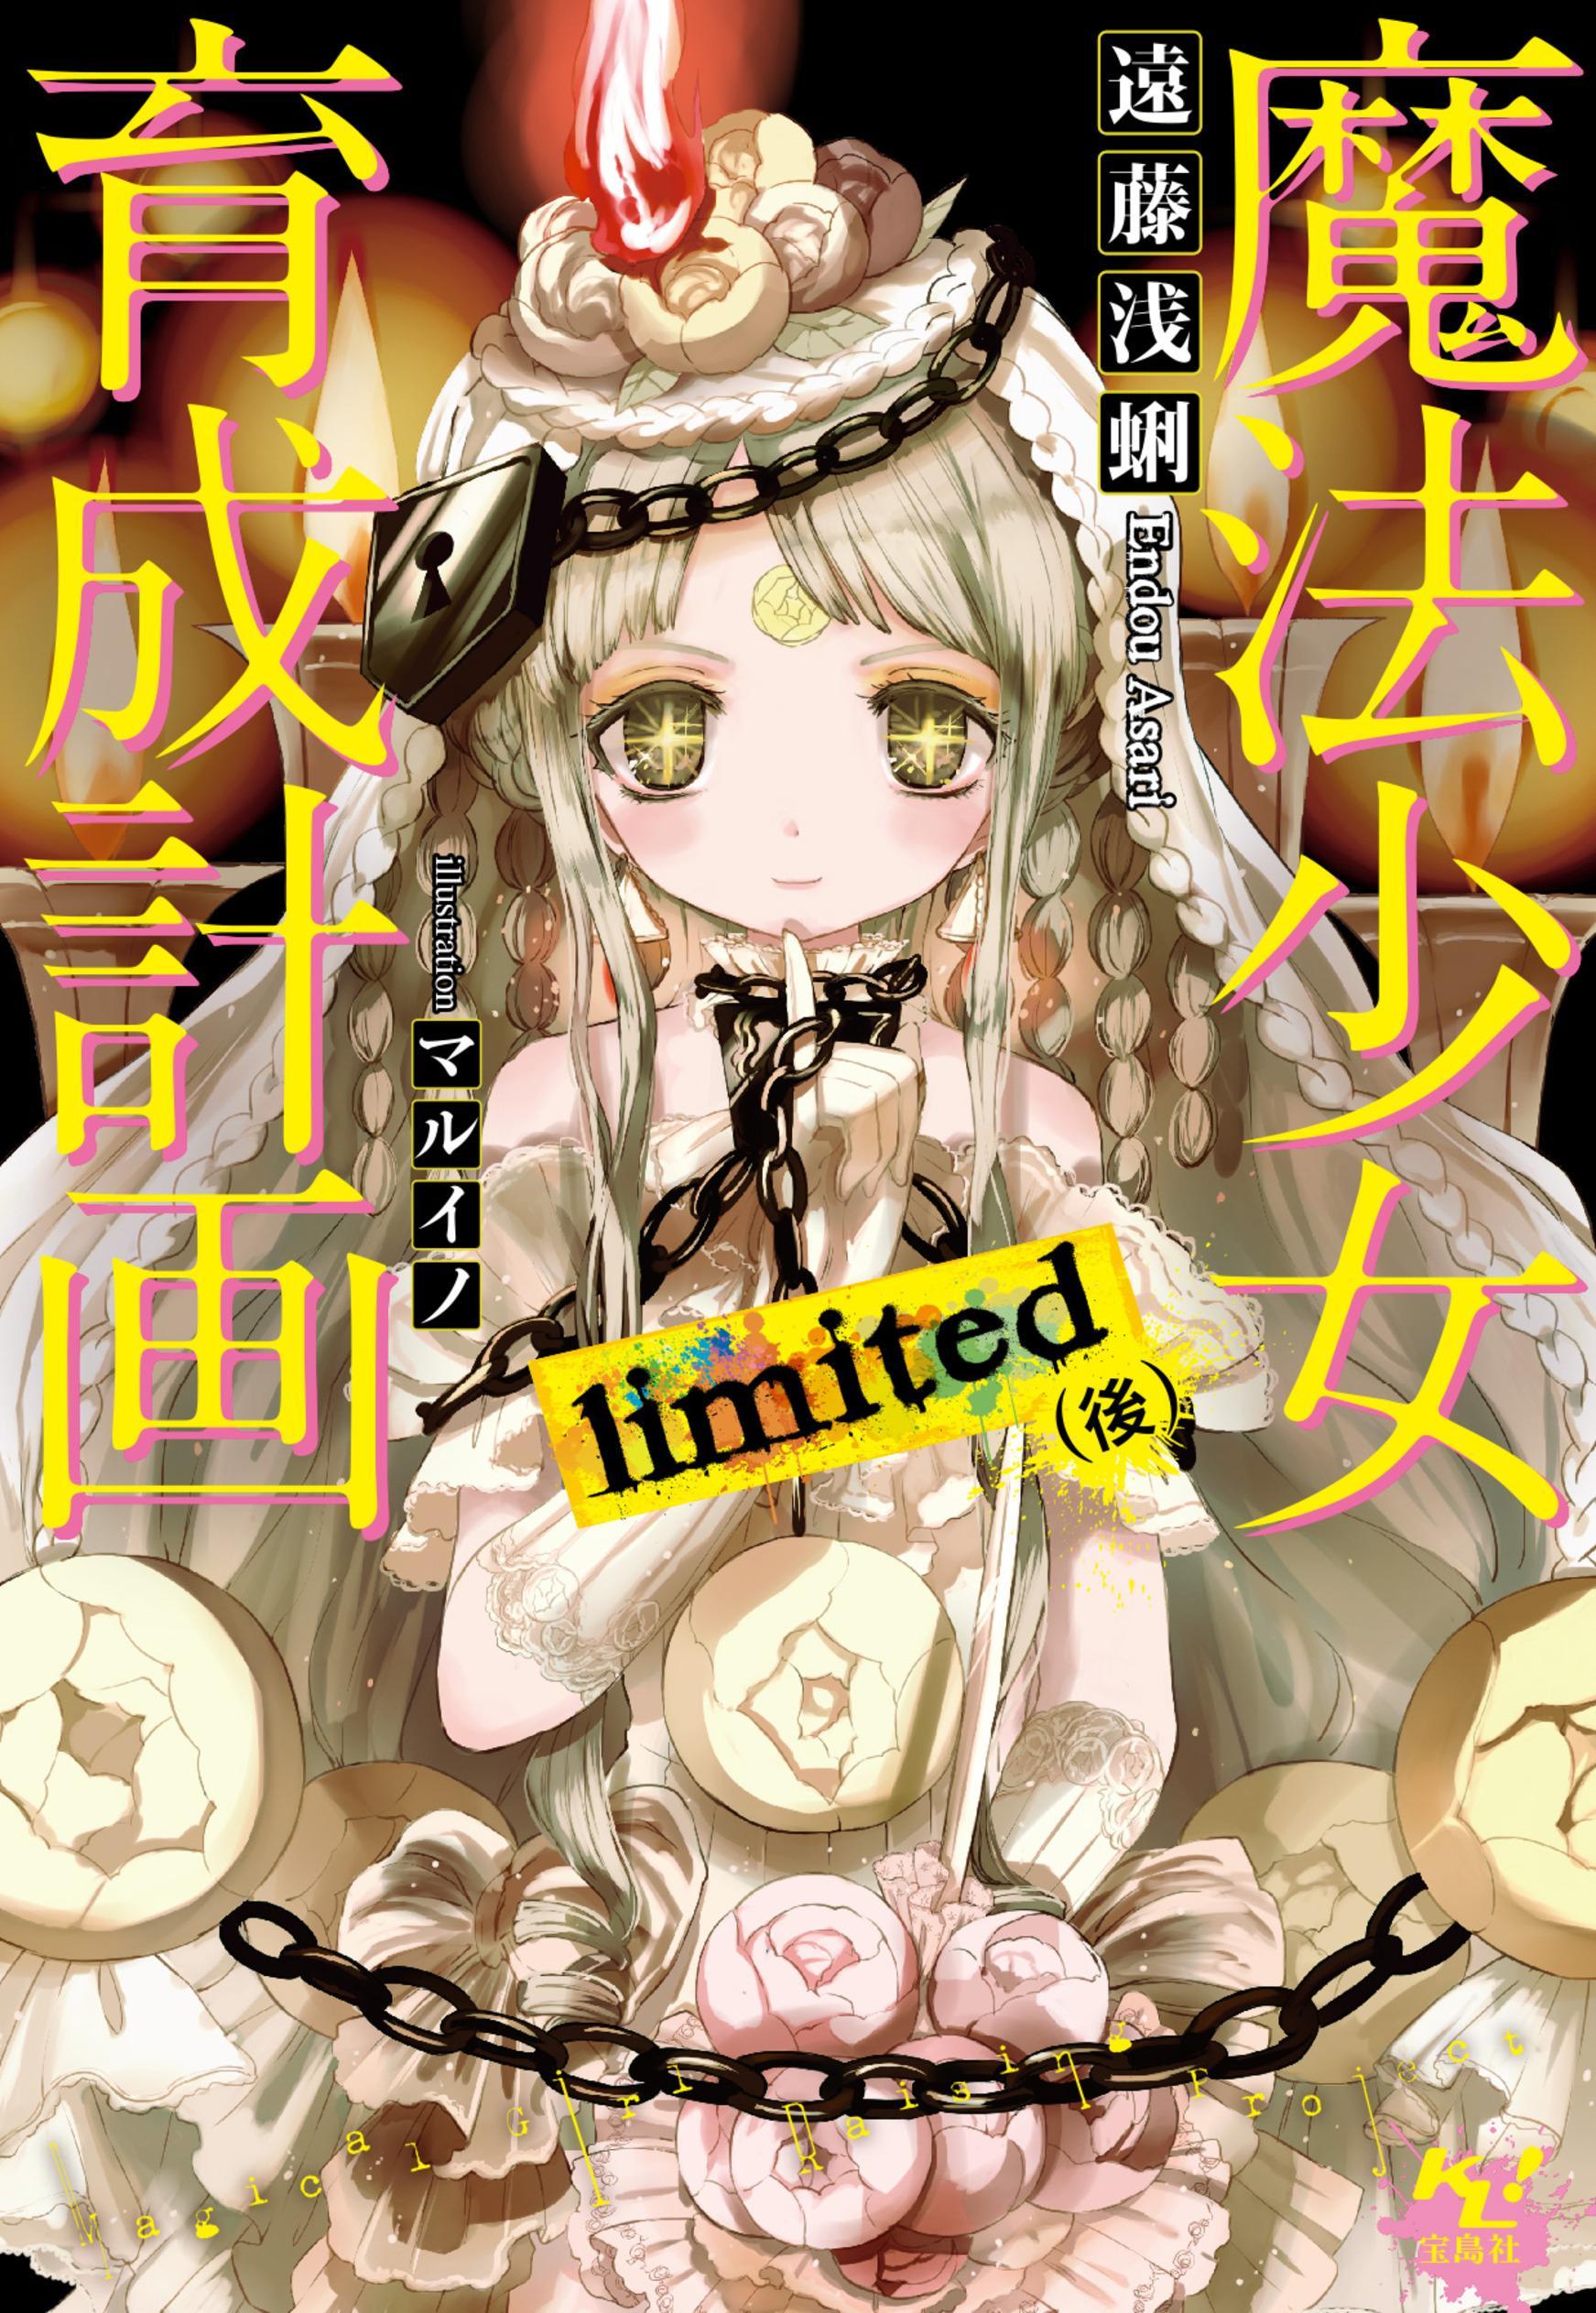 Mahou Shoujo Ikusei Keikaku: Breakdown - Novel Updates